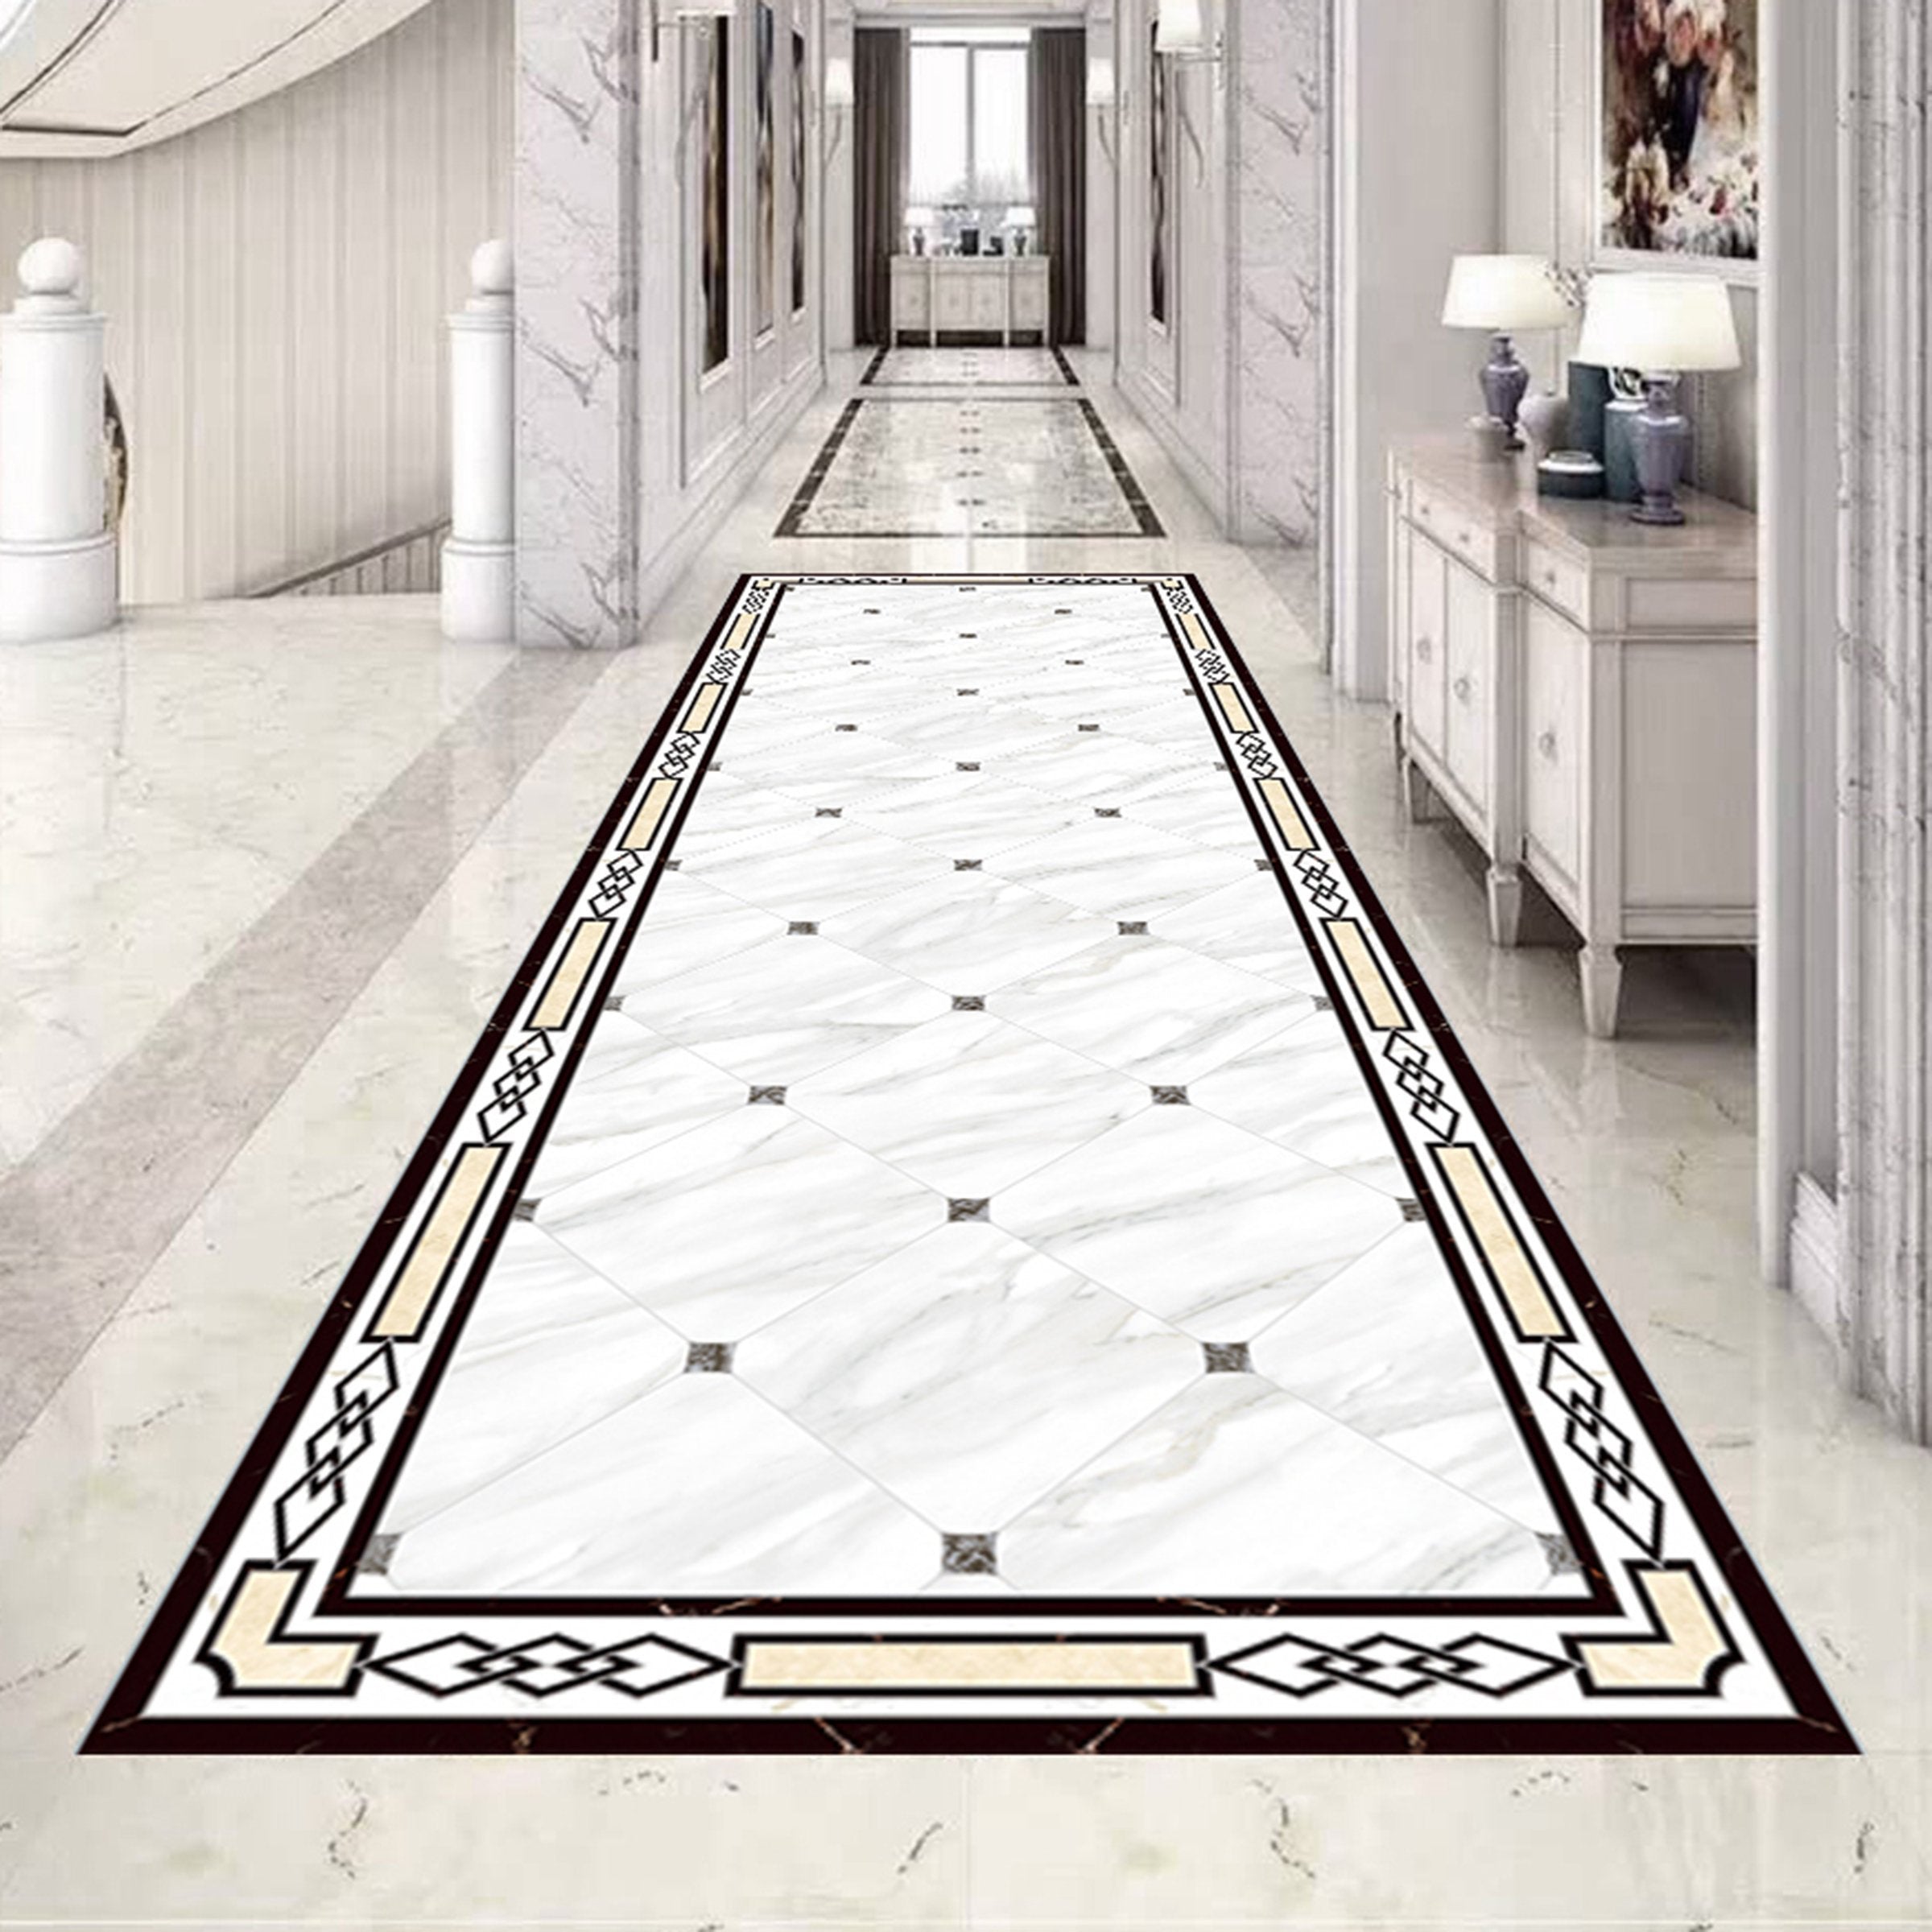 How to Wallpaper A Floor - a renter-friendly alternative! • Grillo Designs